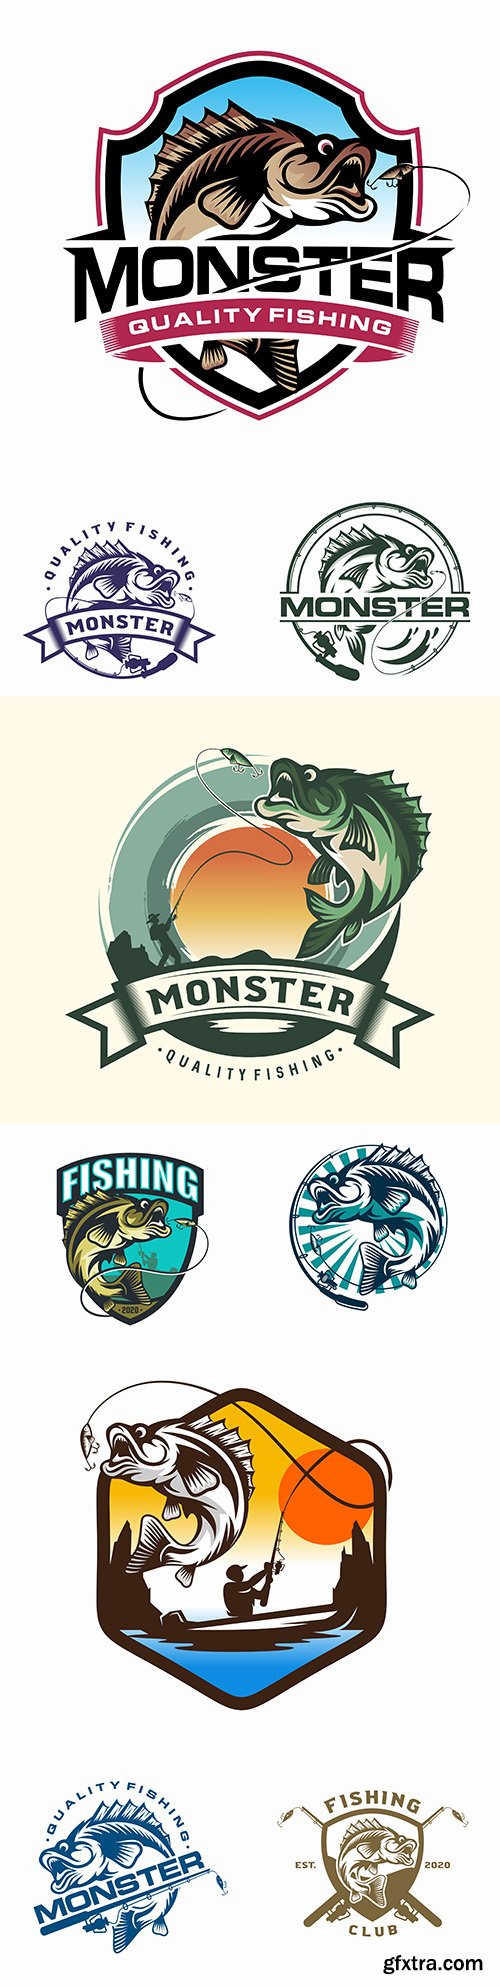 Old logo fishing design Business Company
